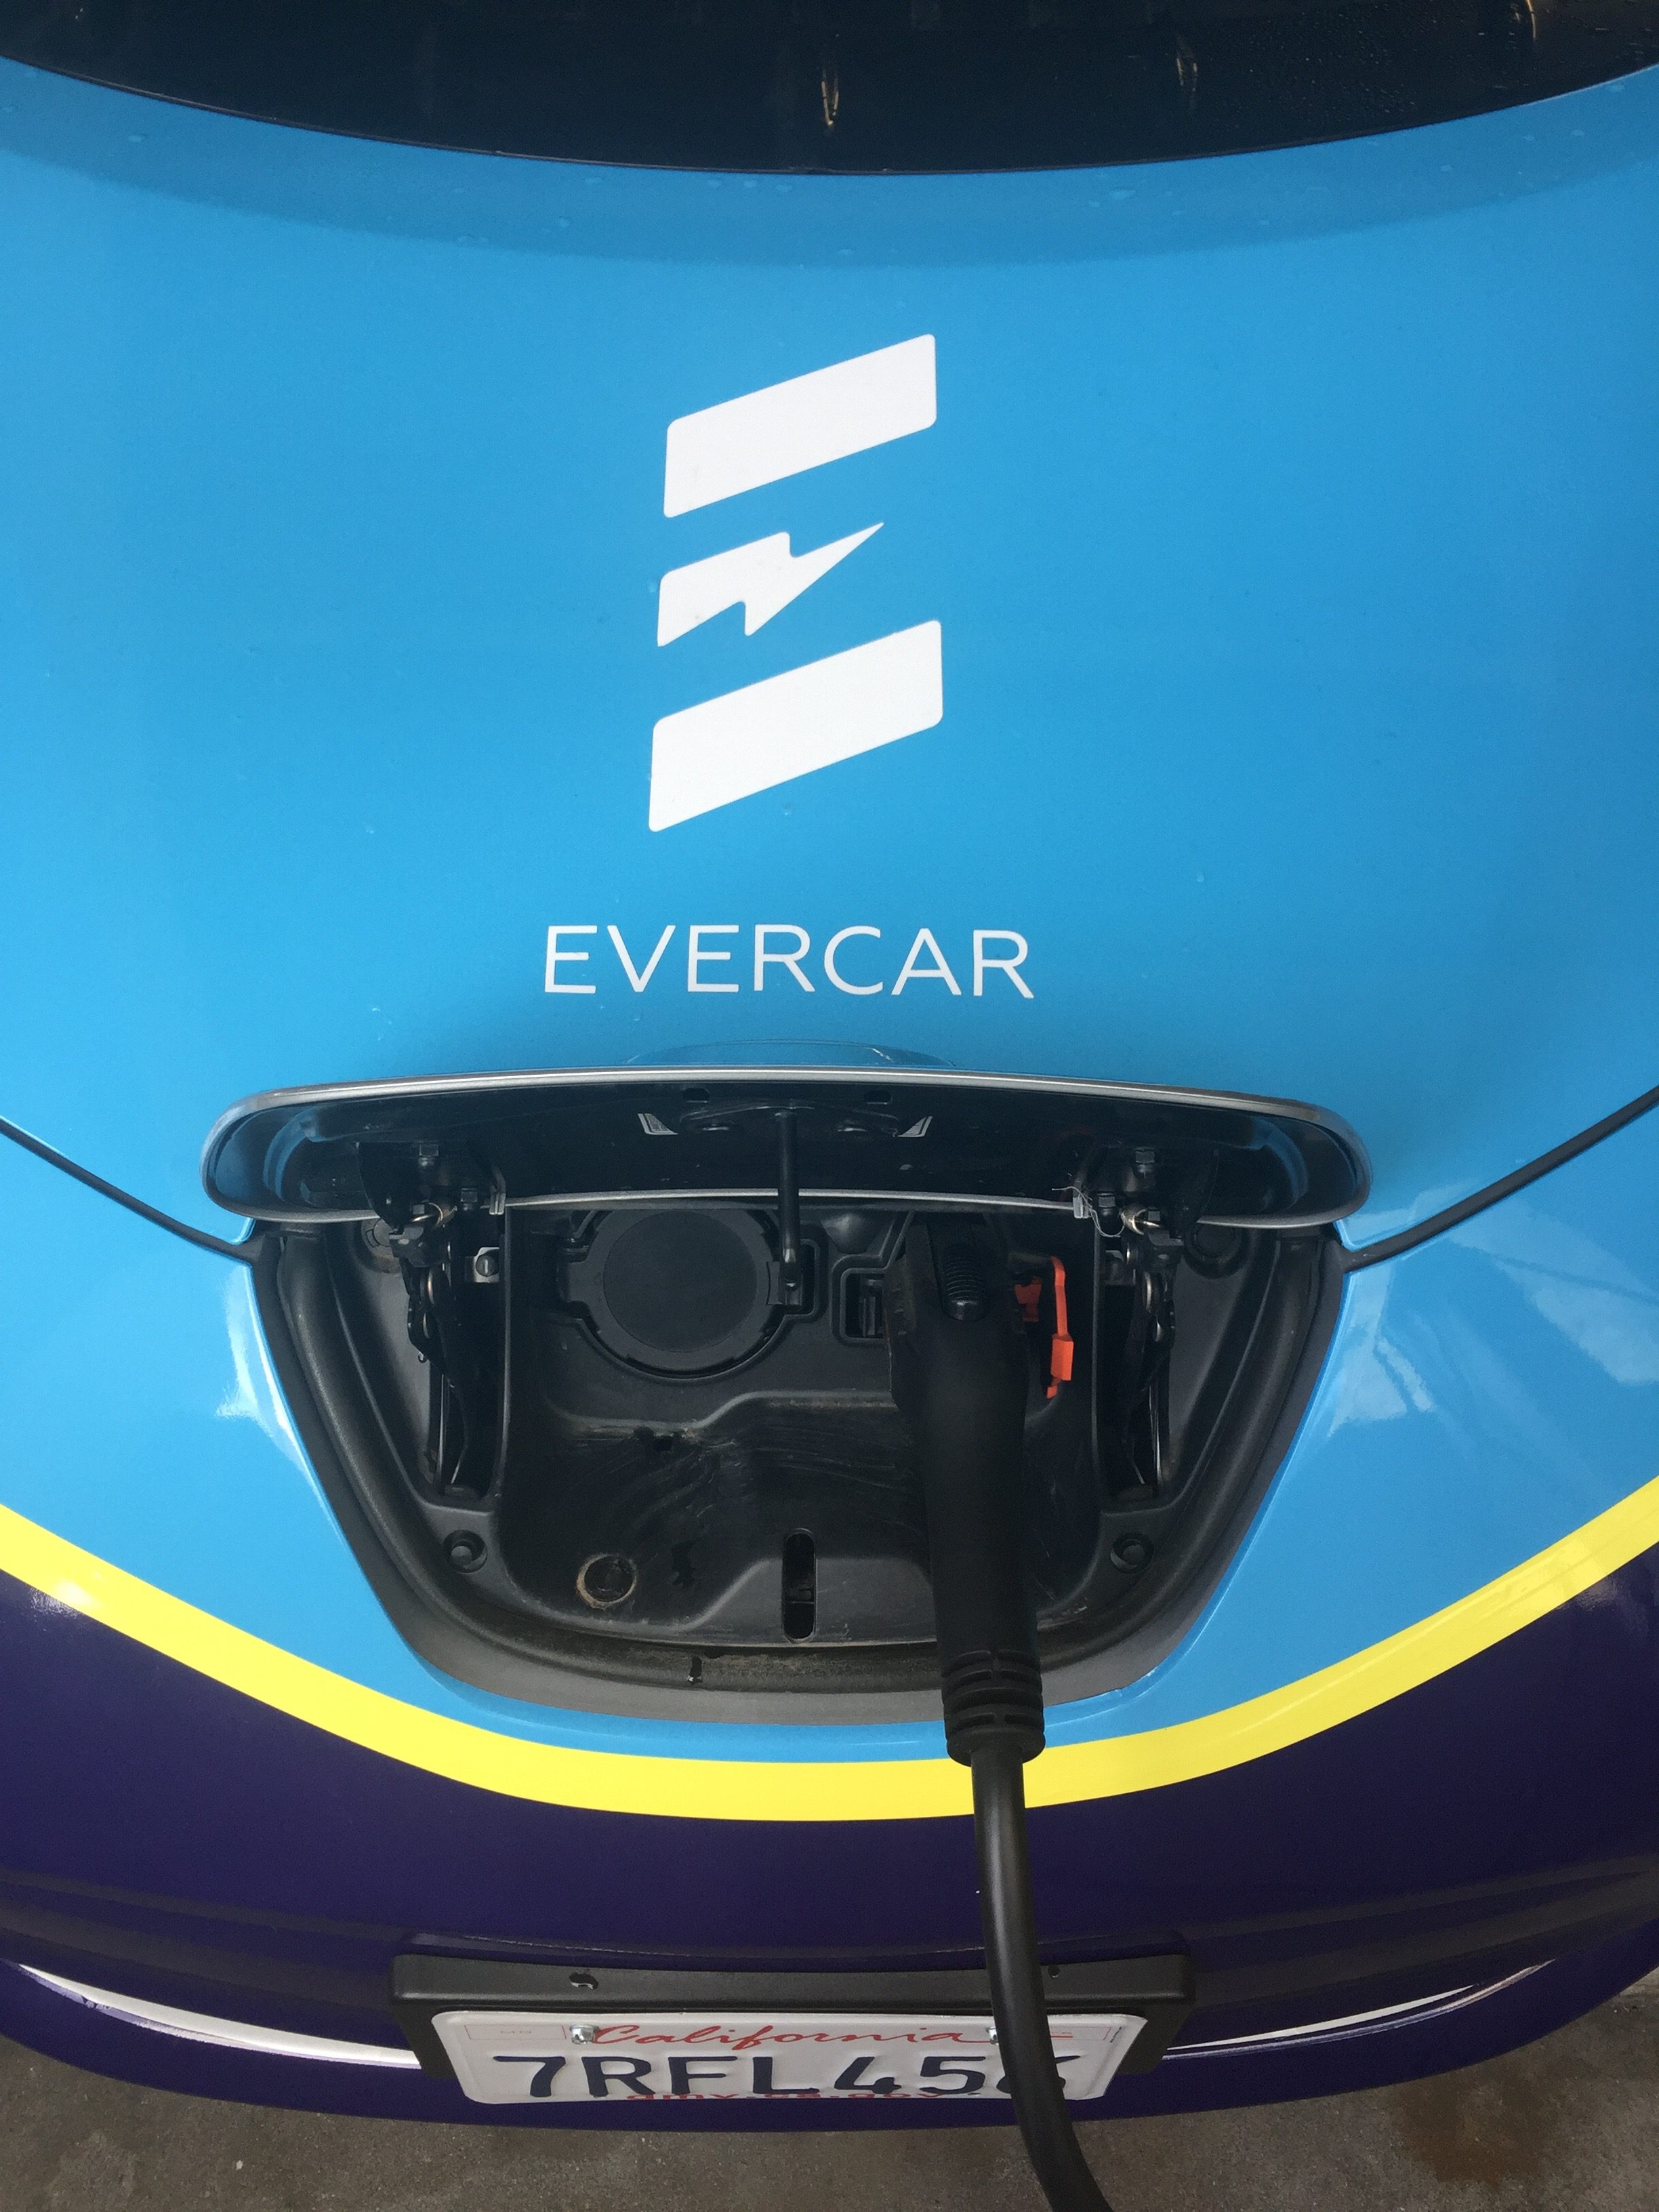 Evercar - Vehicle Charging